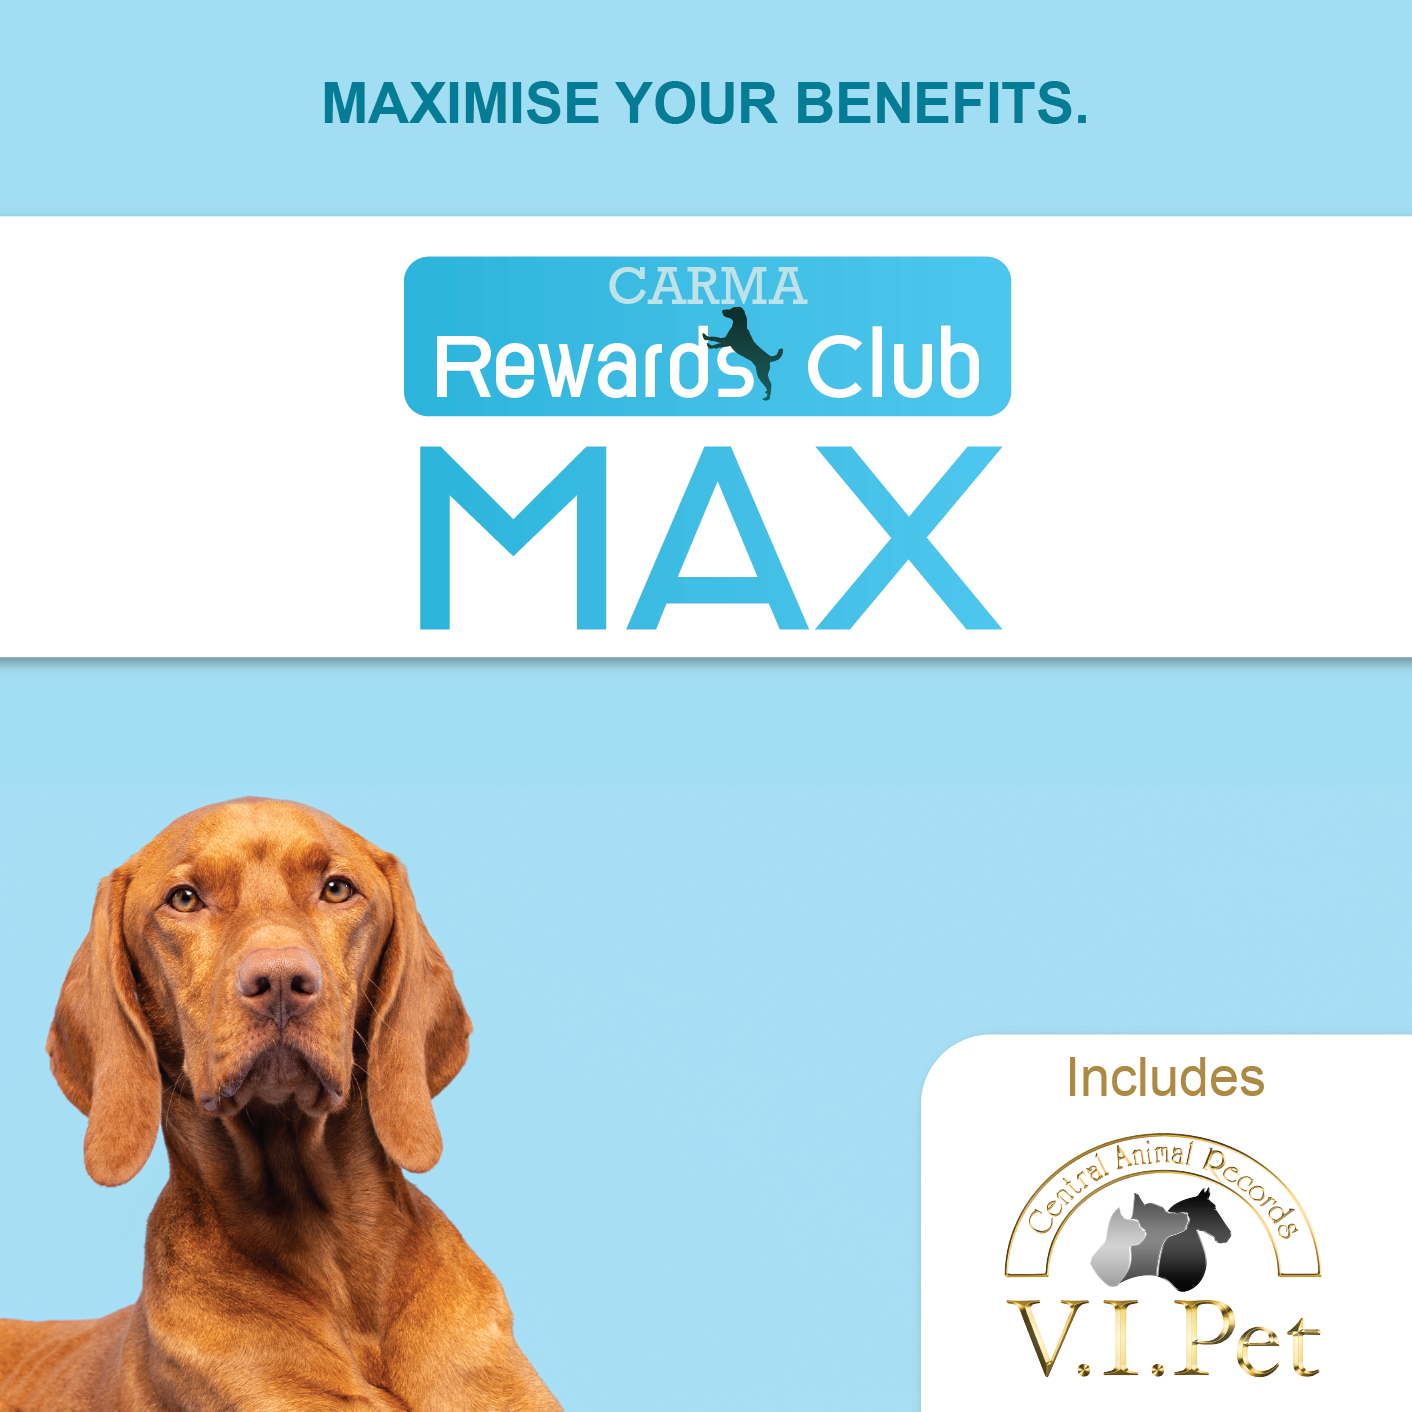 CARMA Rewards Club MAX with Hungarian vizsla